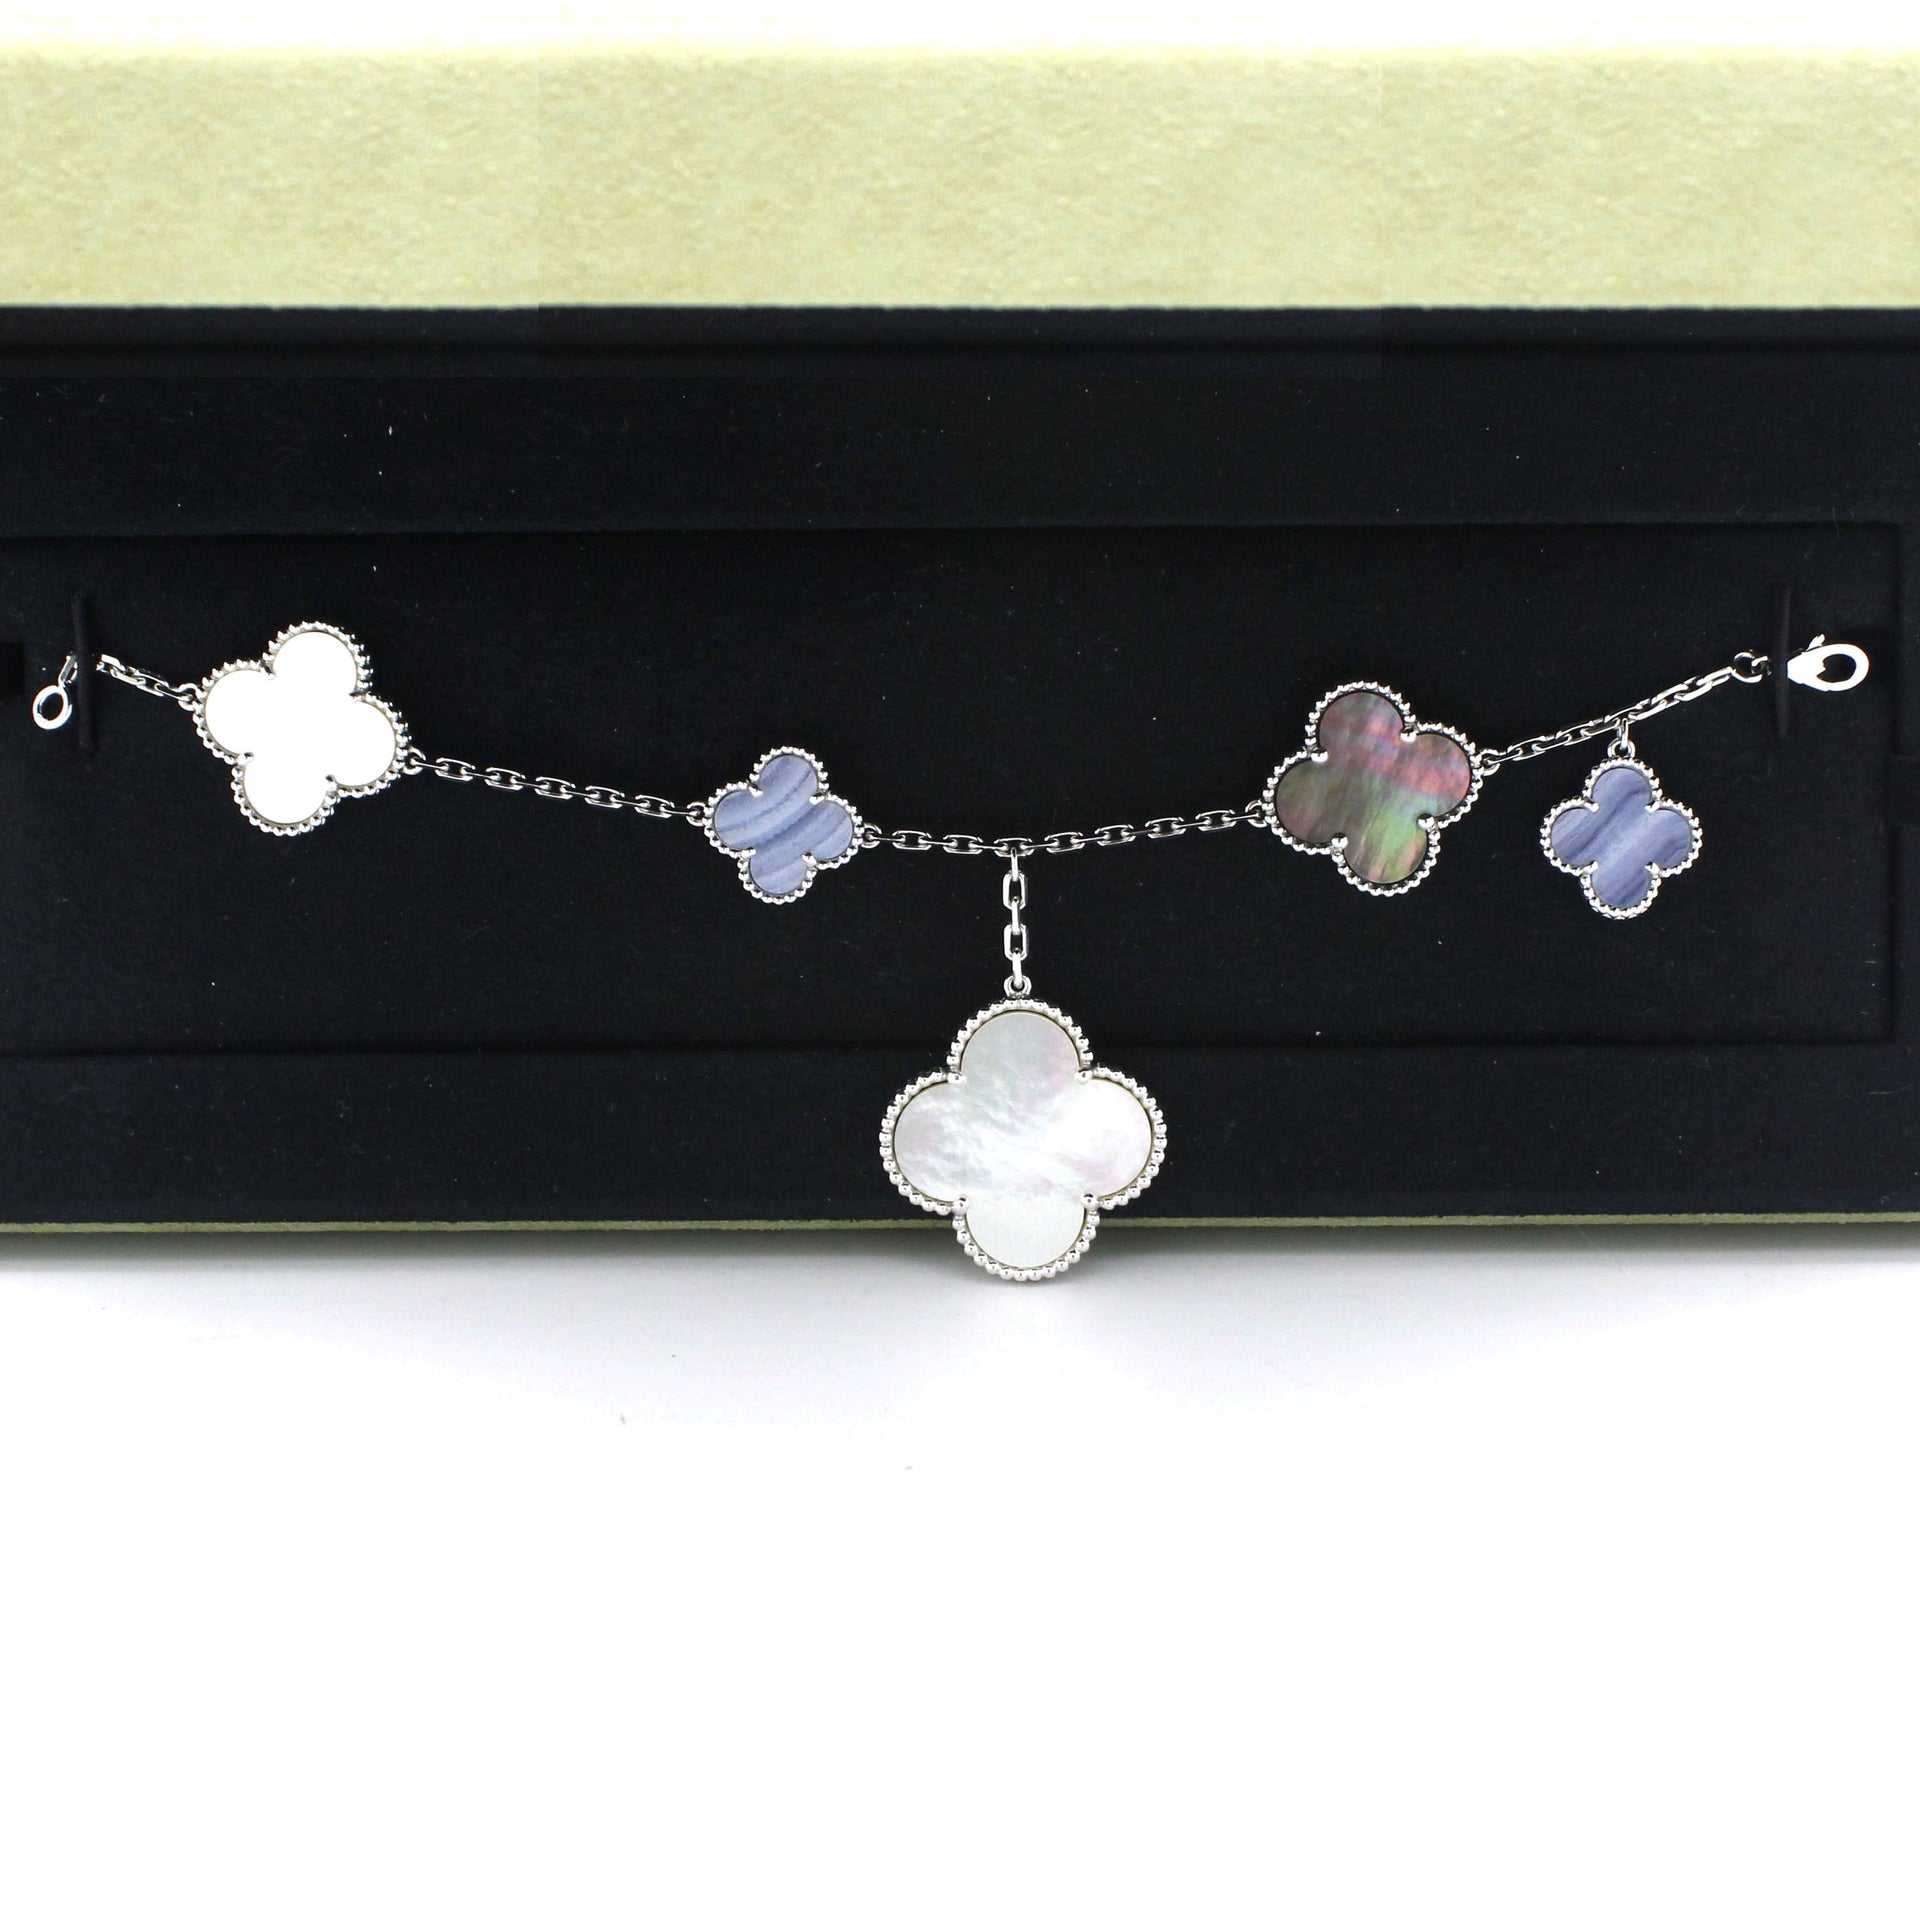 Van Cleef & Arpels Perlée Bracelet 377253 | Collector Square